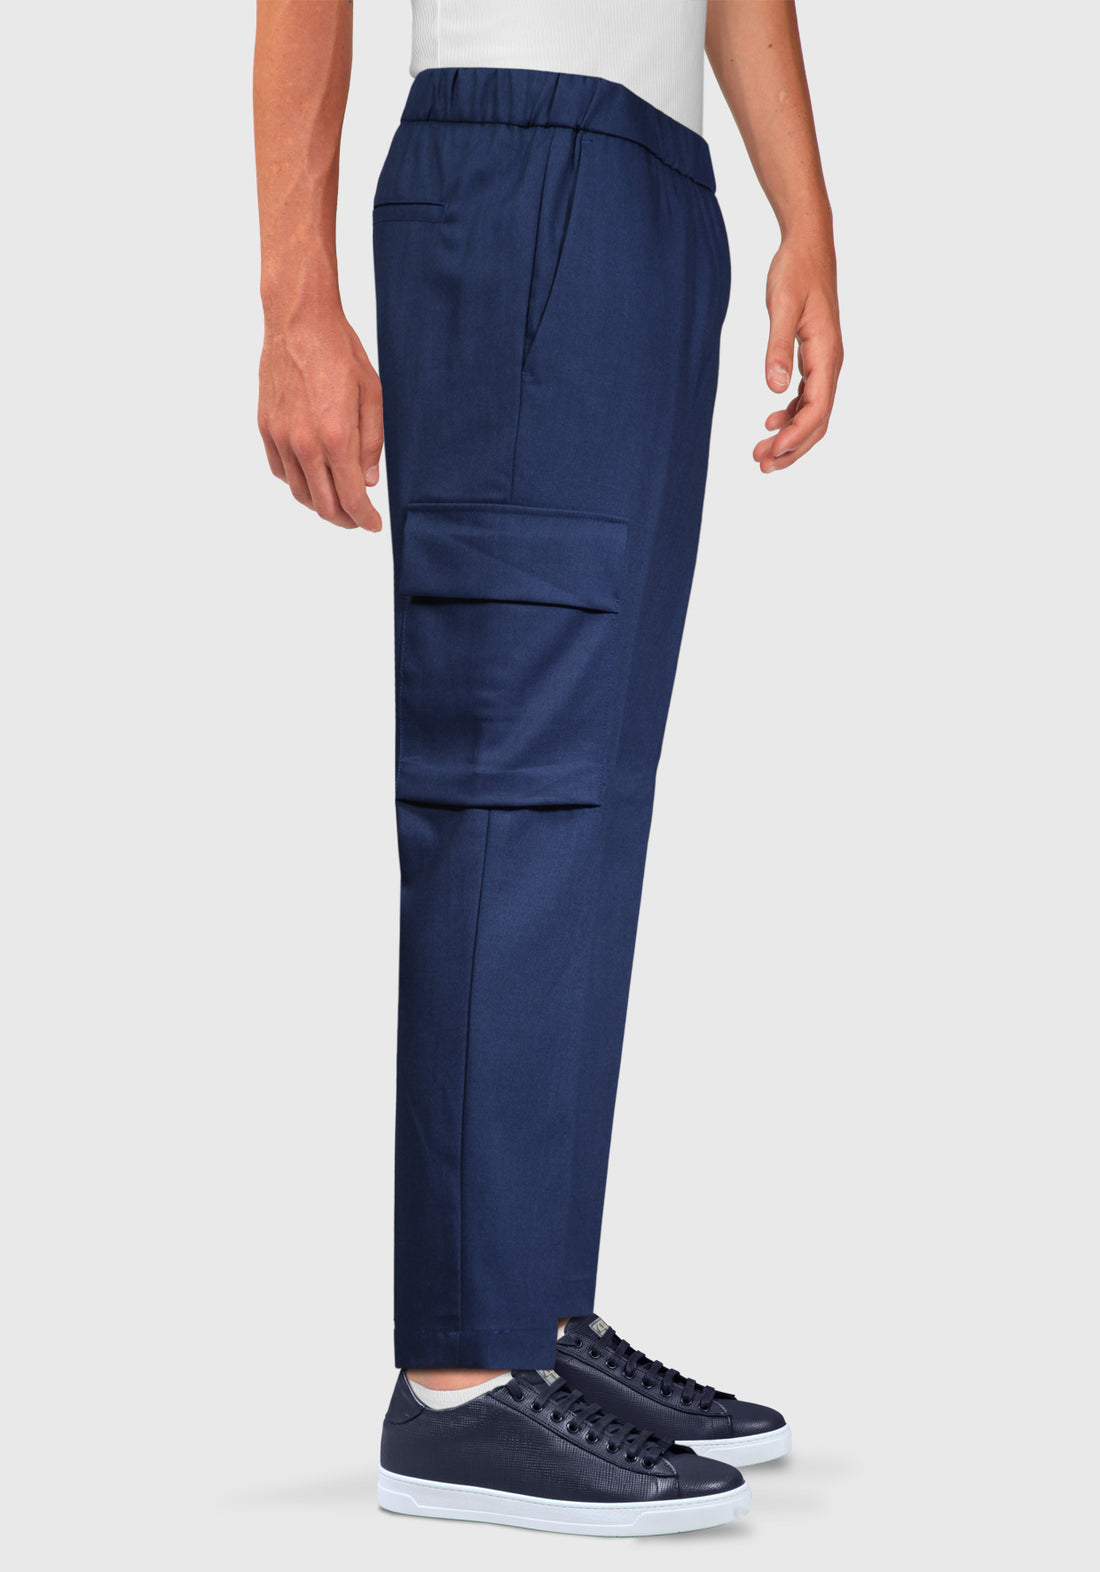 Pantalone fresco Lana con Tascone laterali - Blue